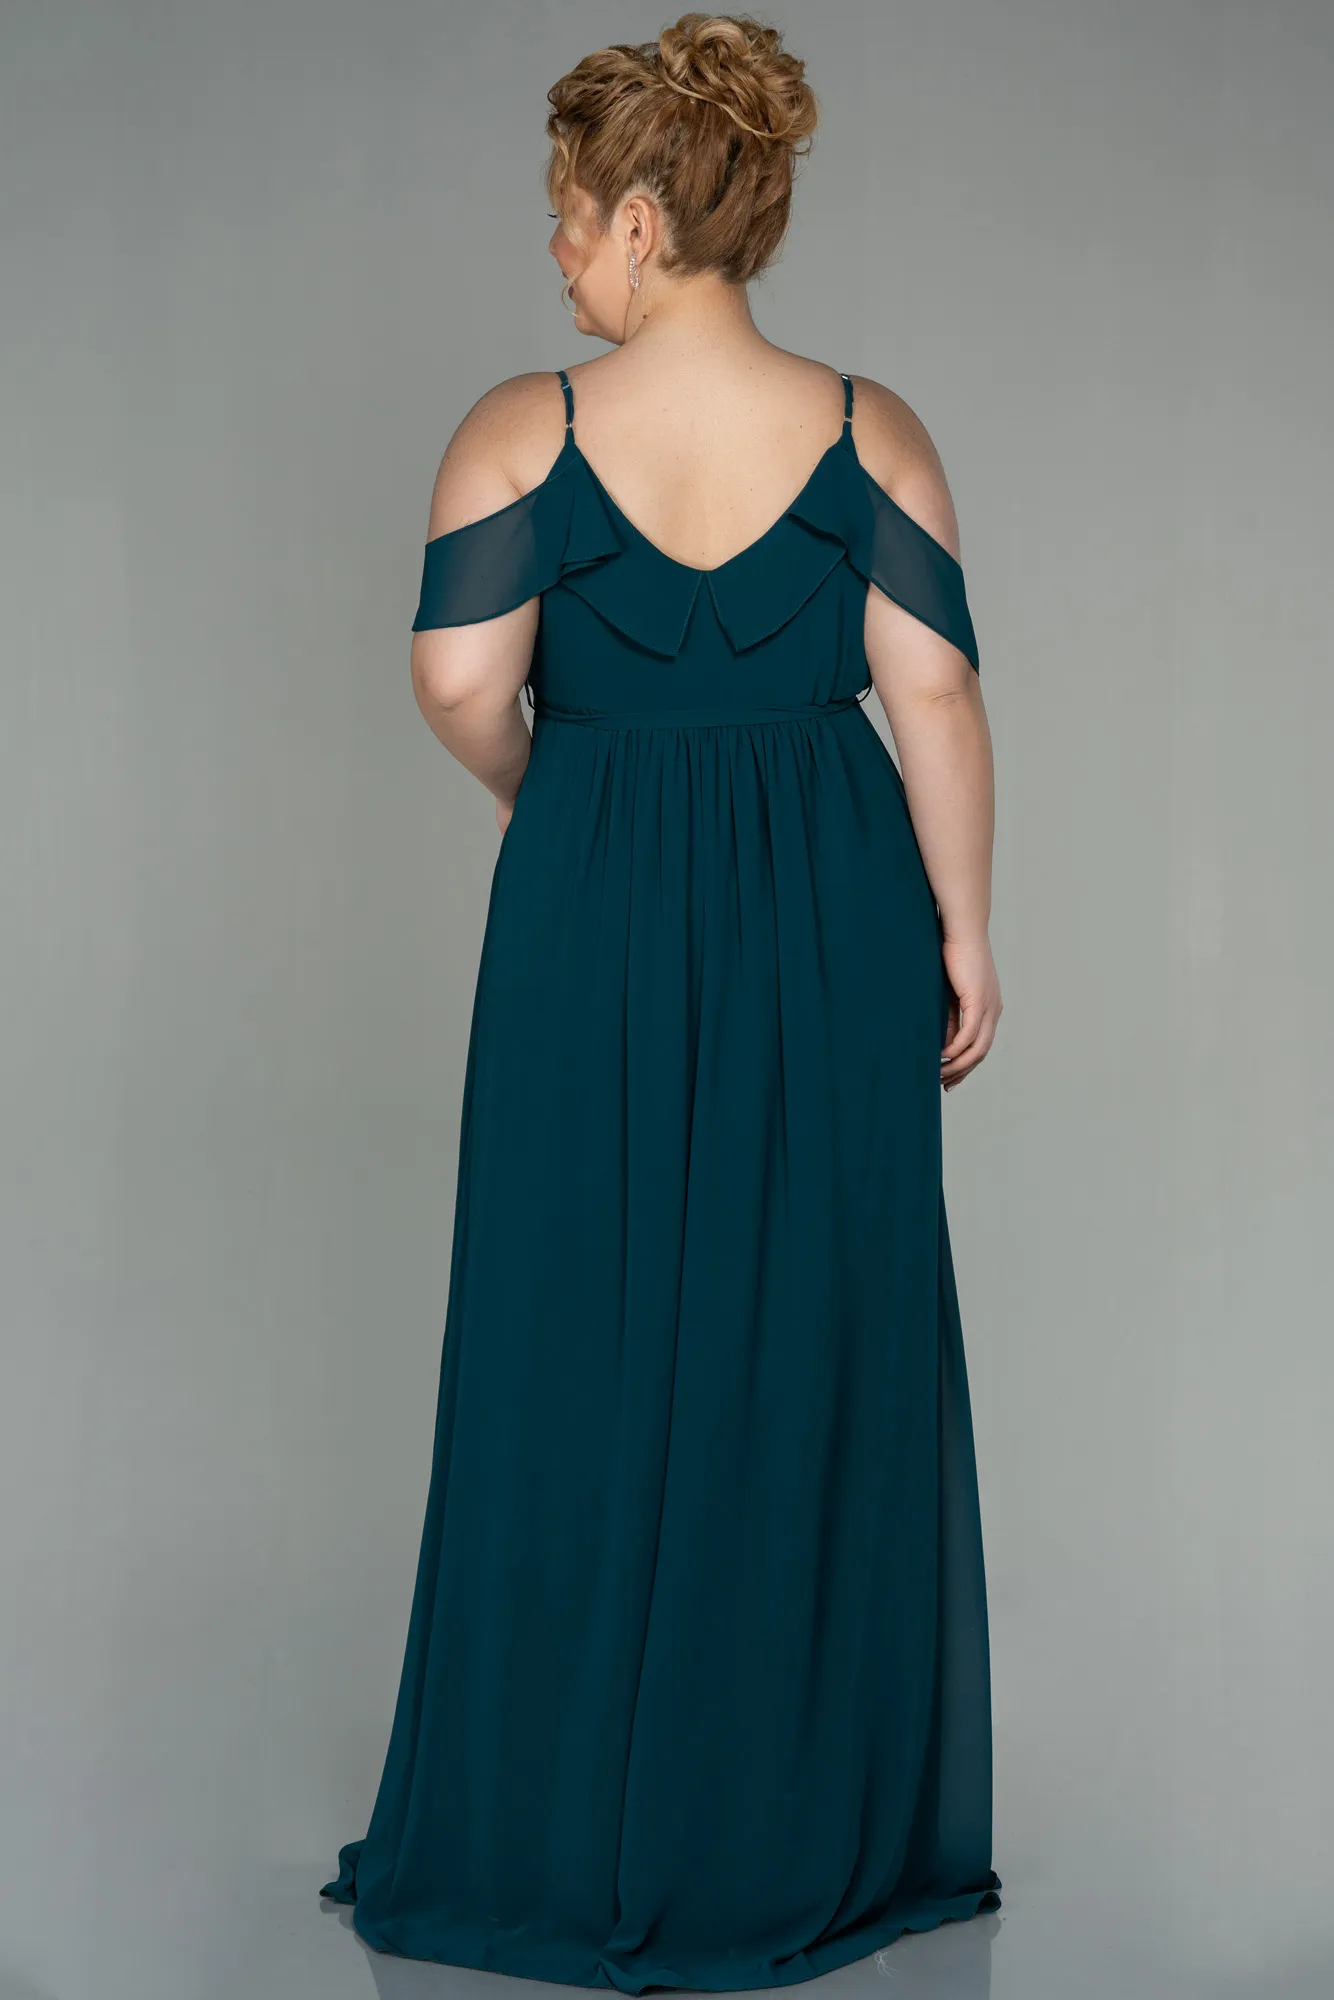 Emerald Green-Long Plus Size Evening Dress ABU1449